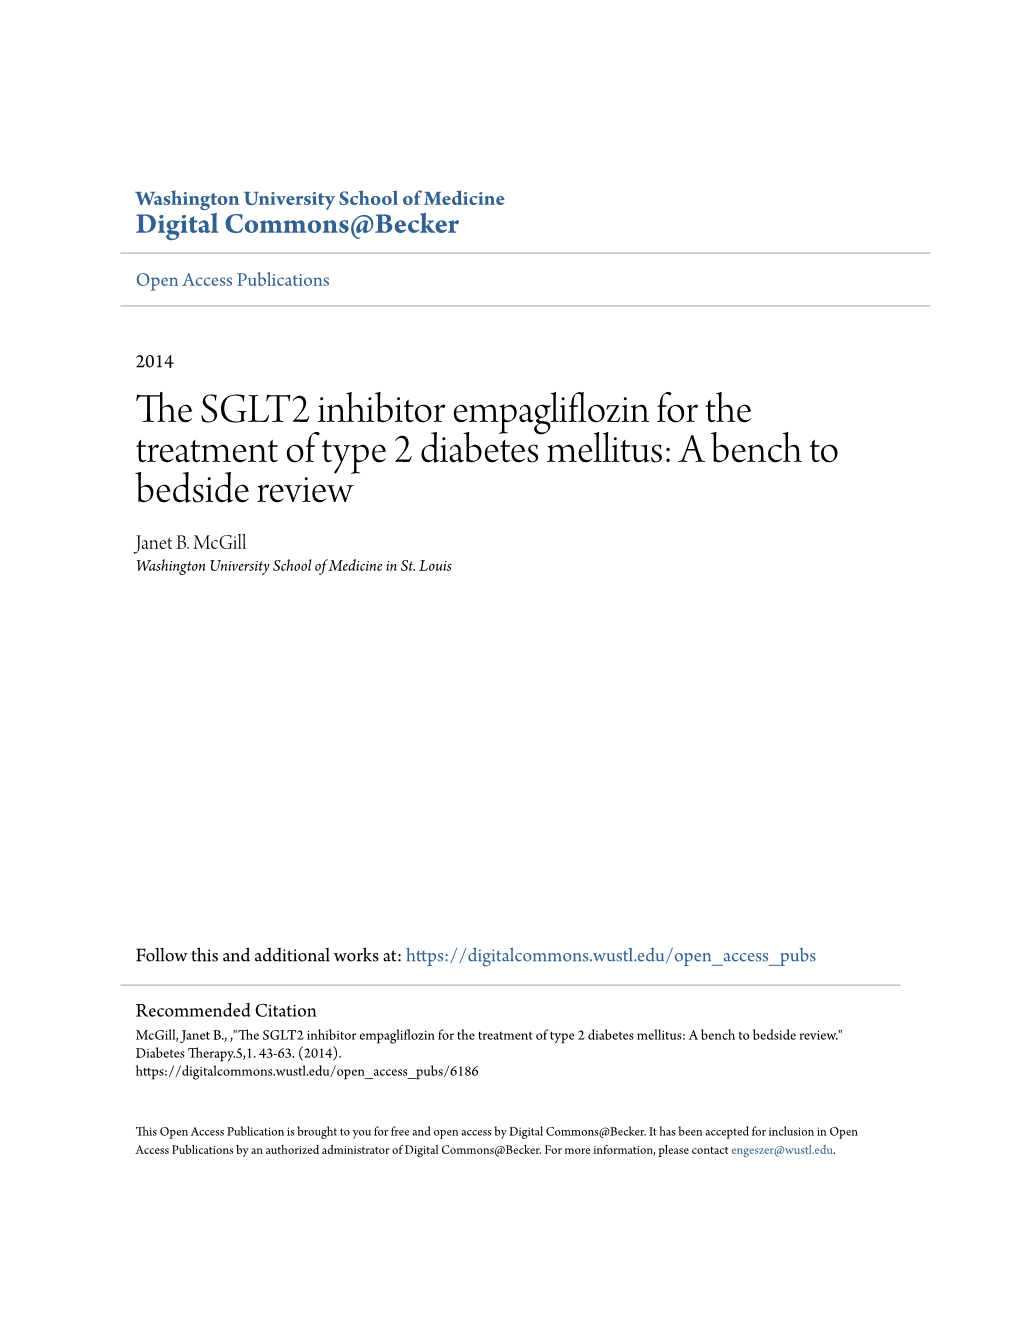 The SGLT2 Inhibitor Empagliflozin for the Treatment of Type 2 Diabetes